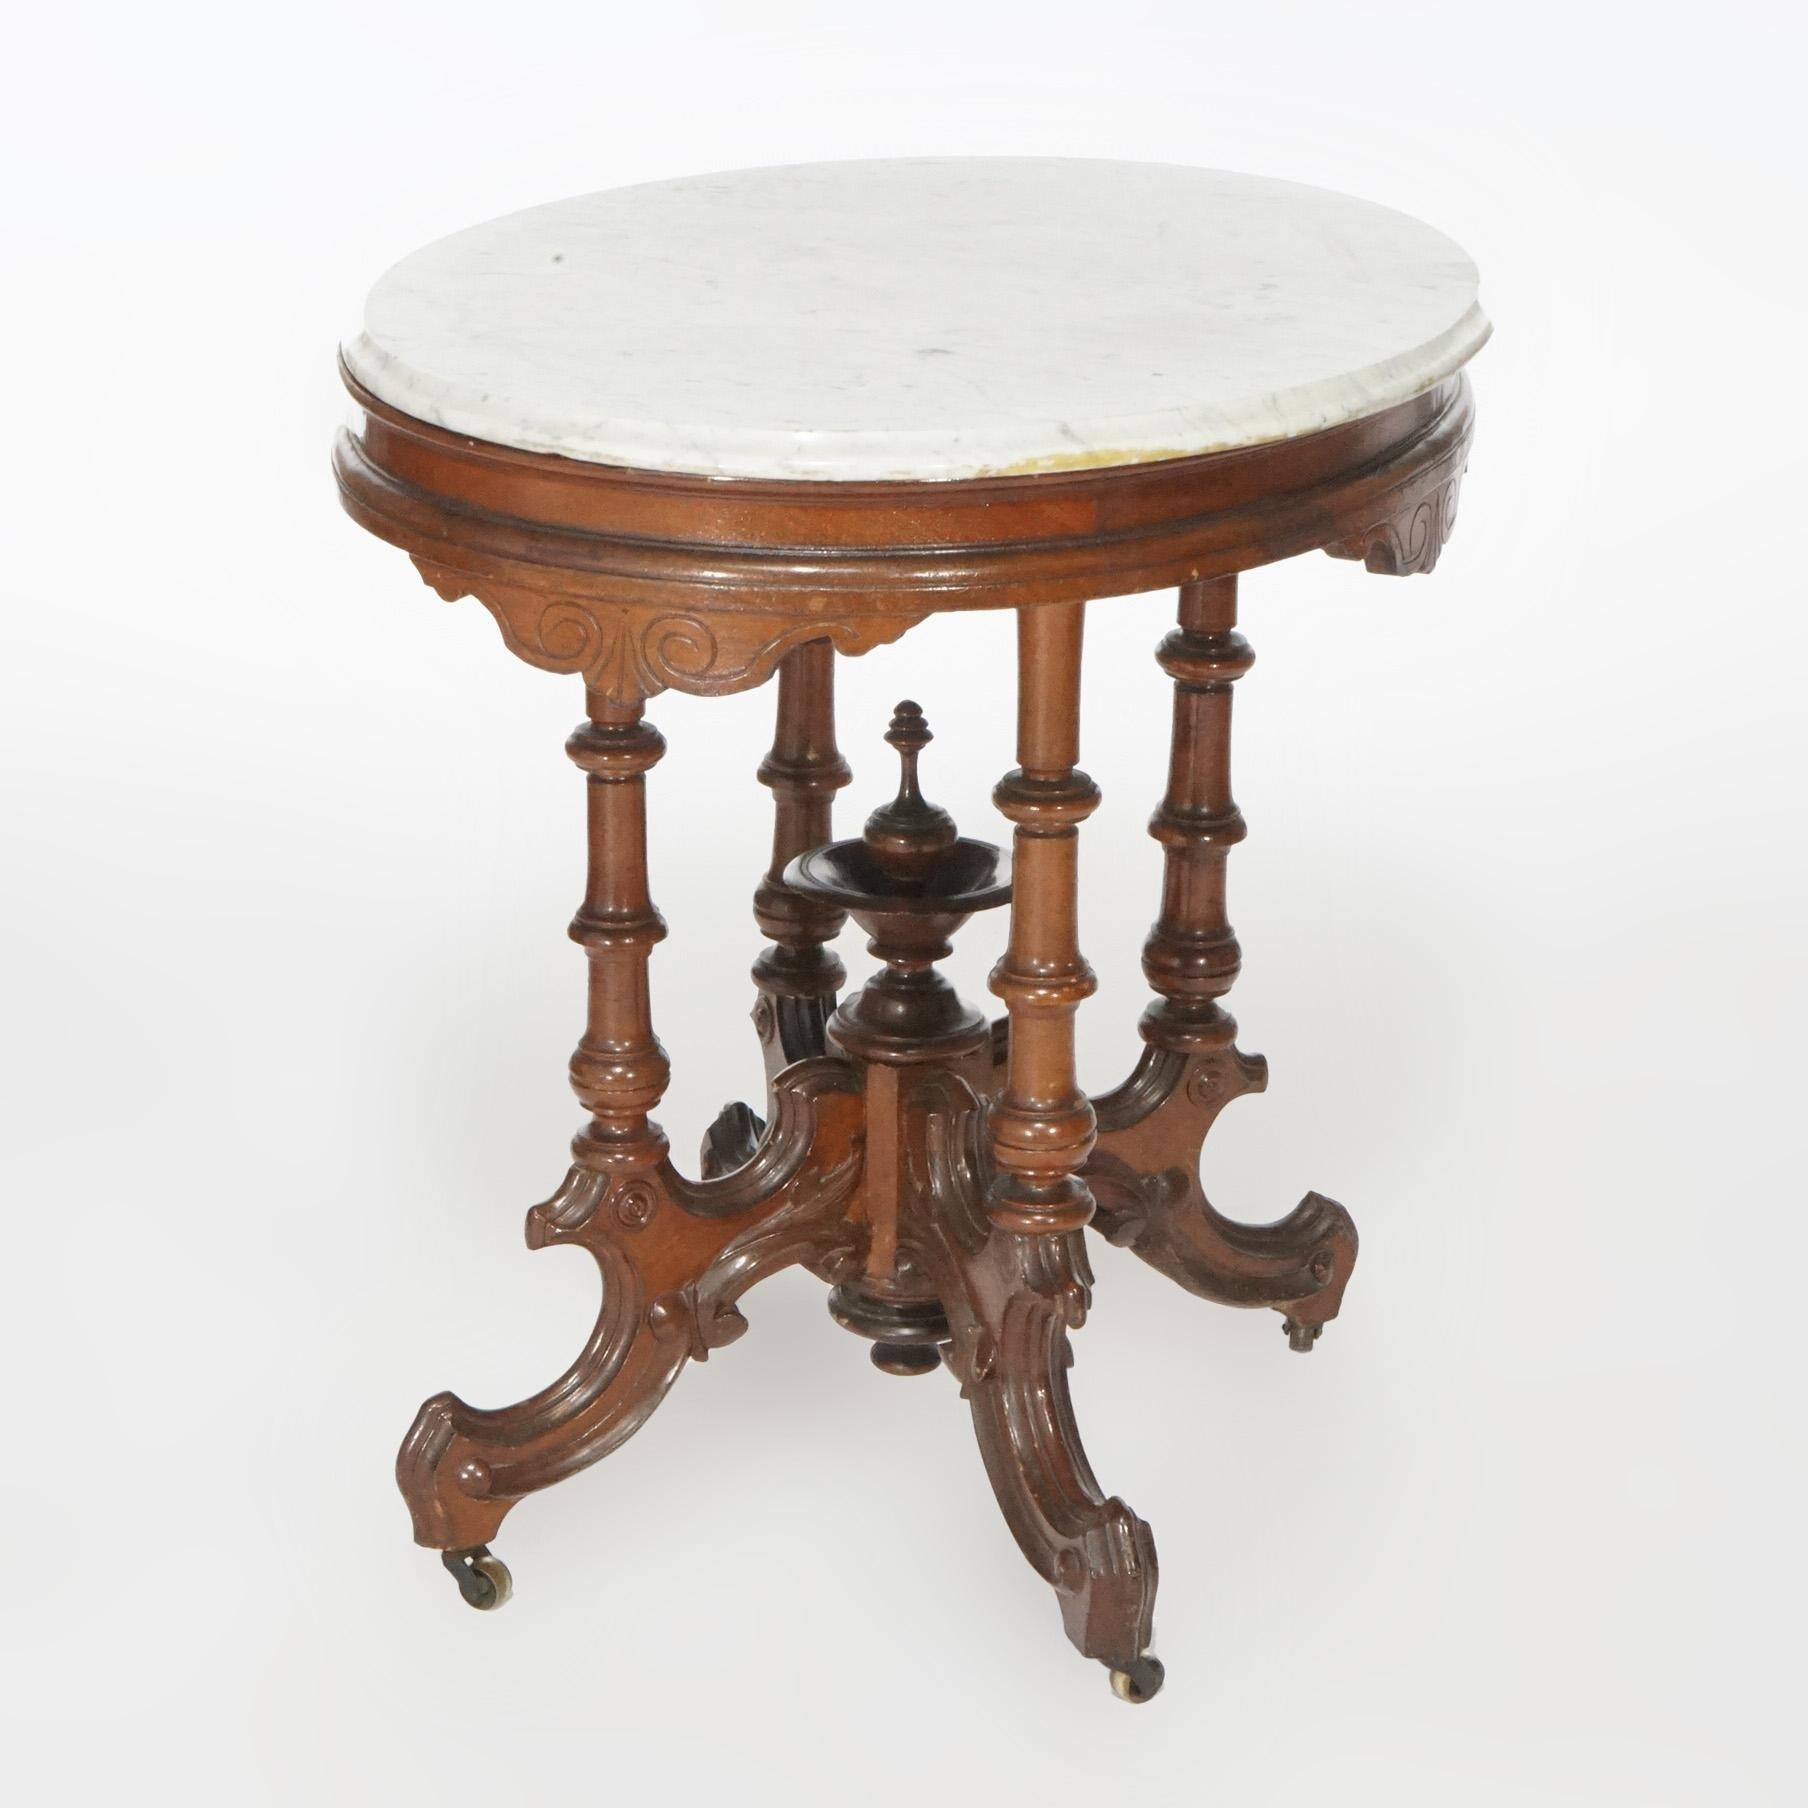 Antique Renaissance Revival Walnut Oval Marble Top Parlor Table, circa 1890 For Sale 3